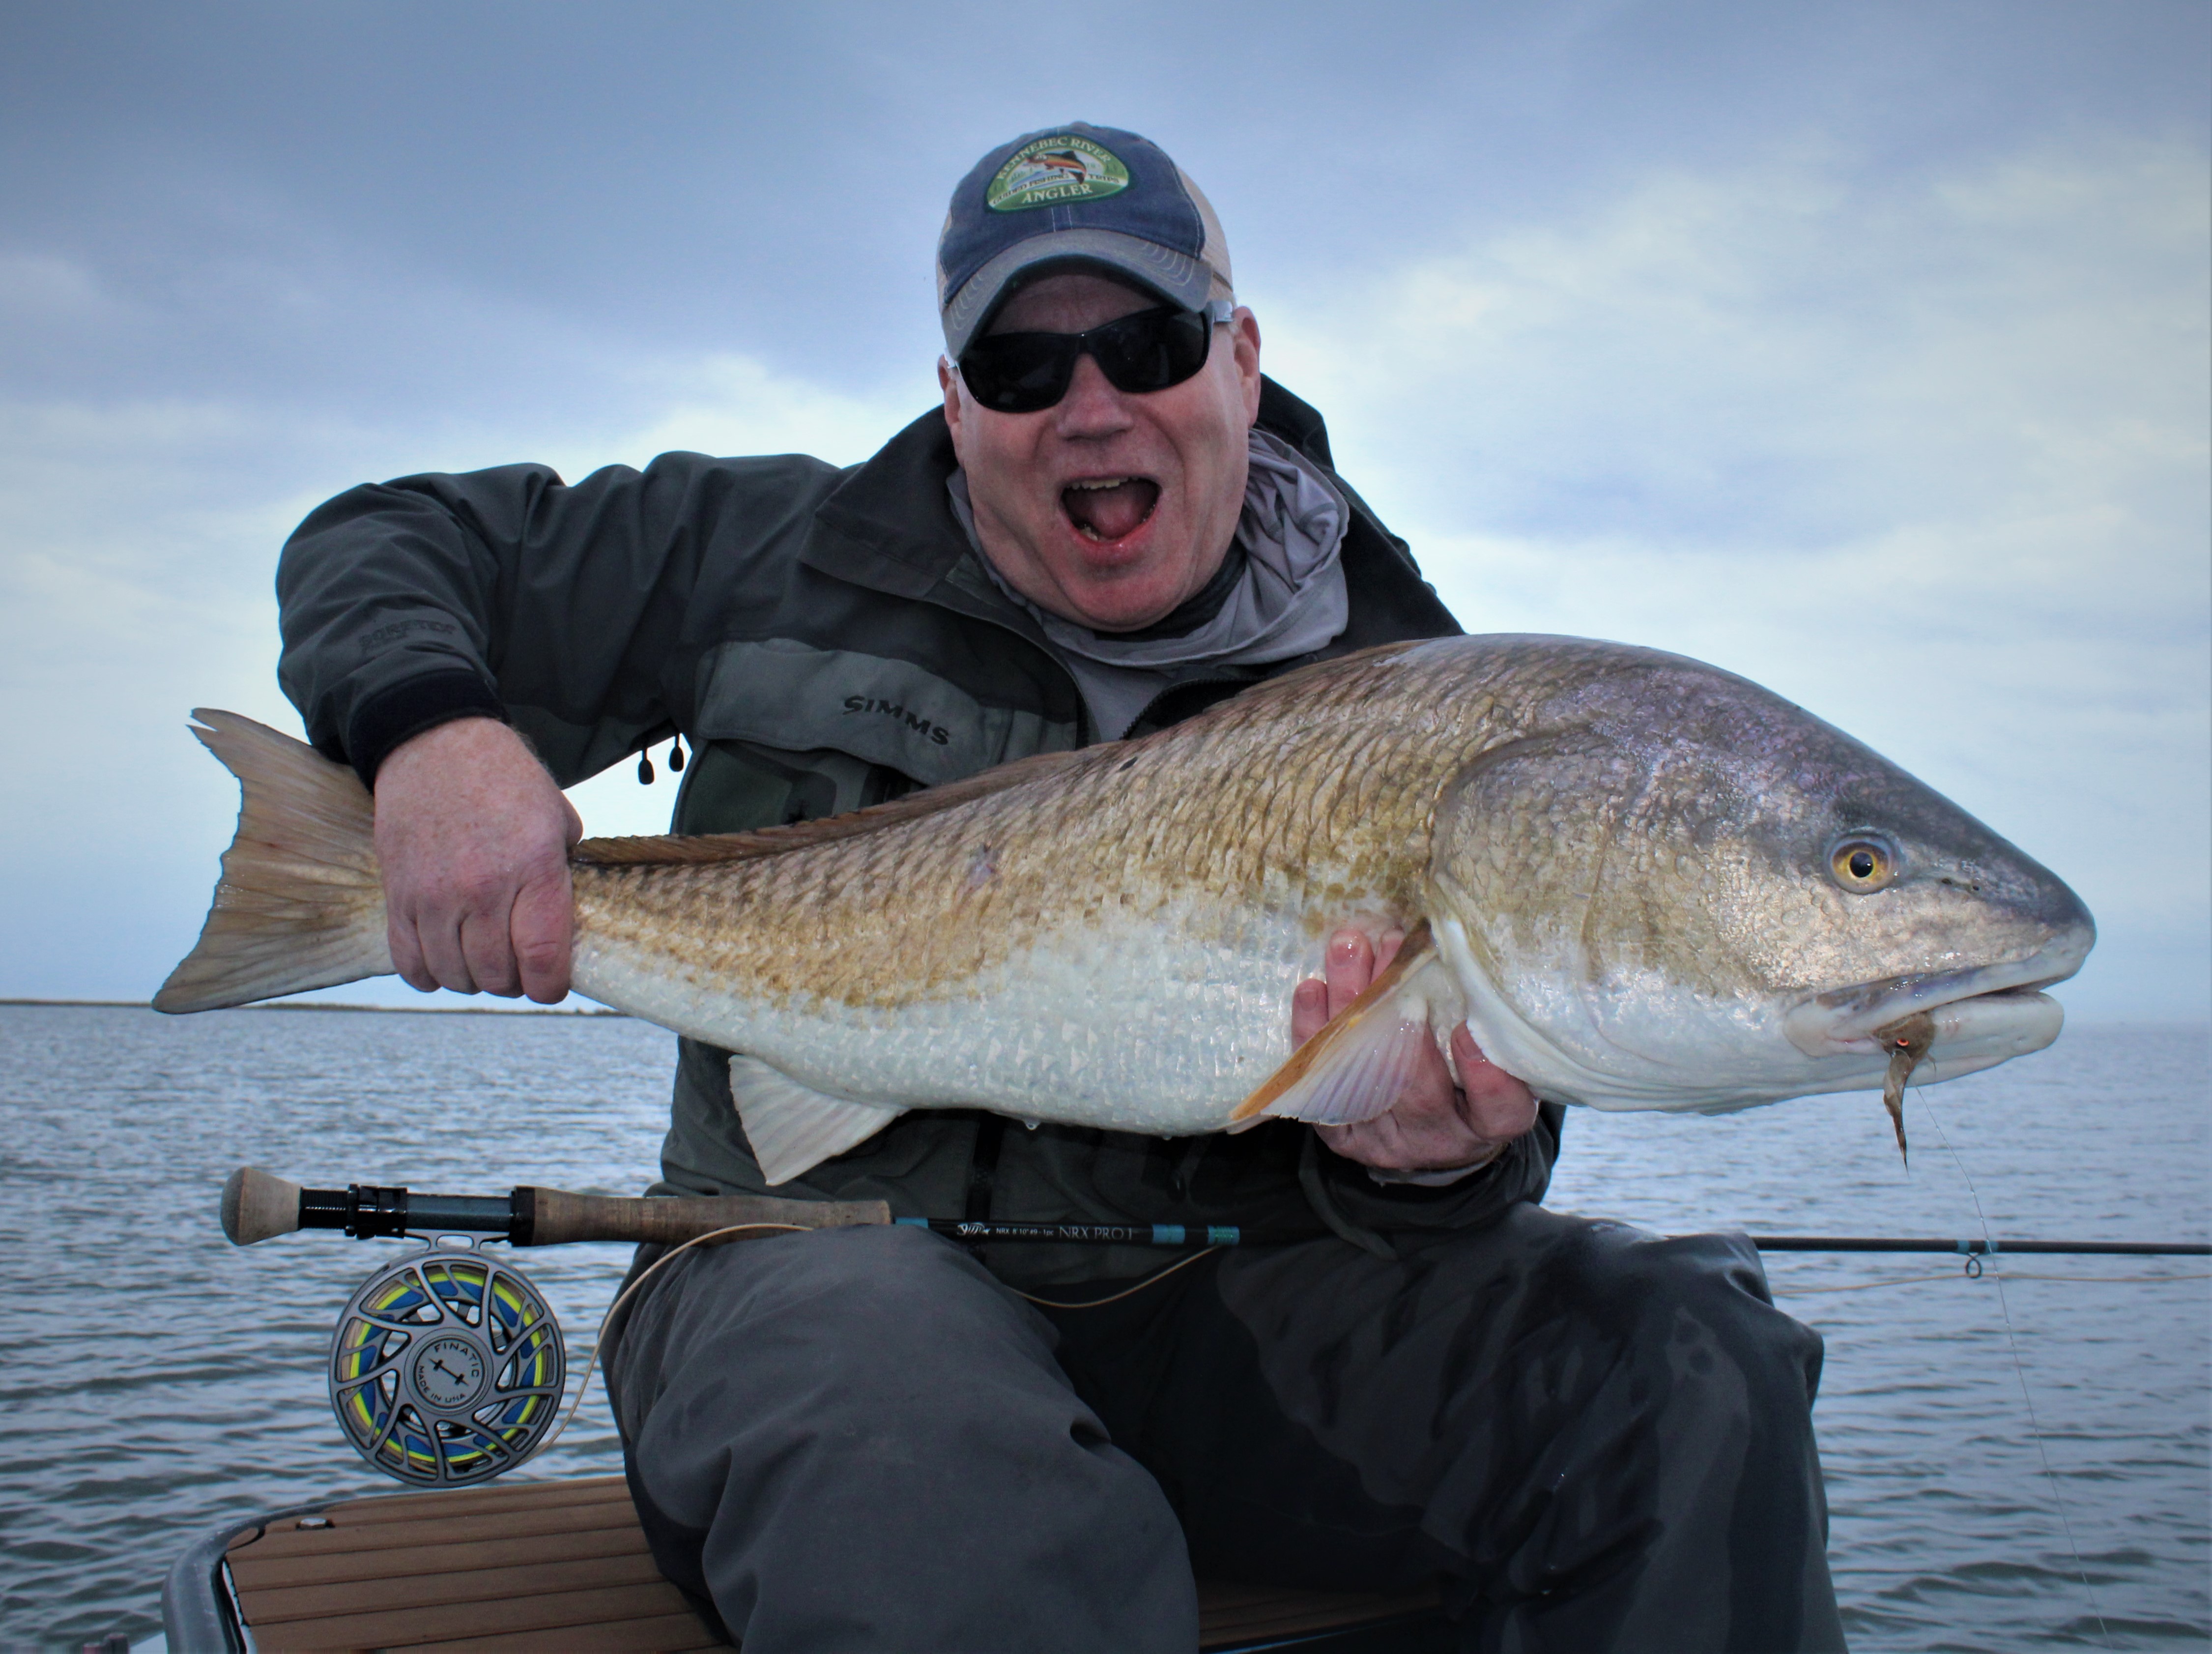 Big smiles and big fish in the Louisiana Marsh.